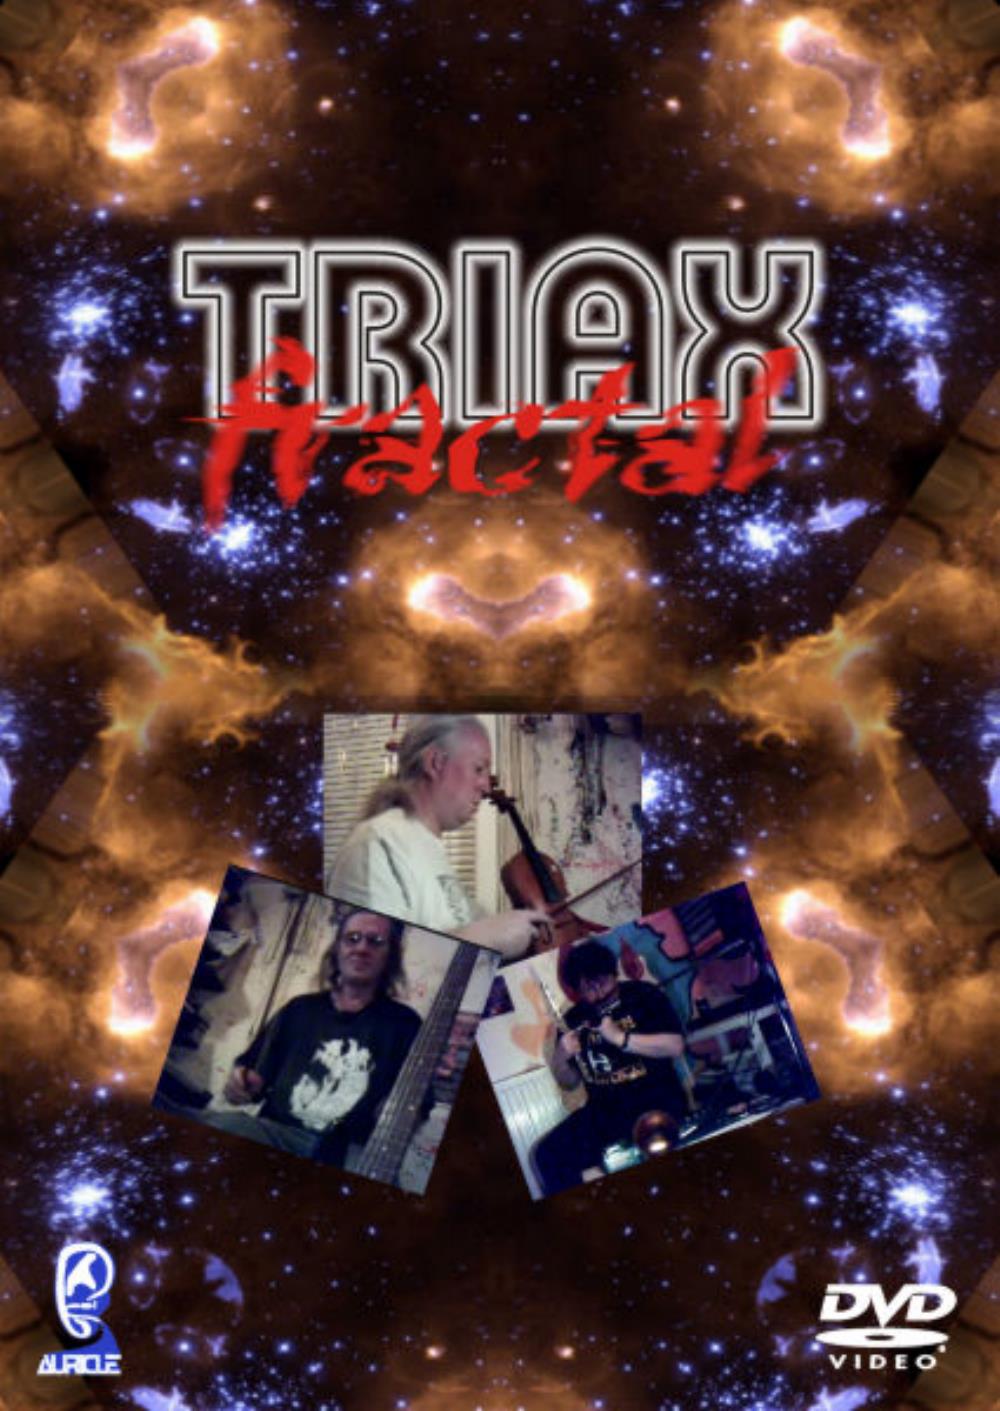 Triax Fractal album cover